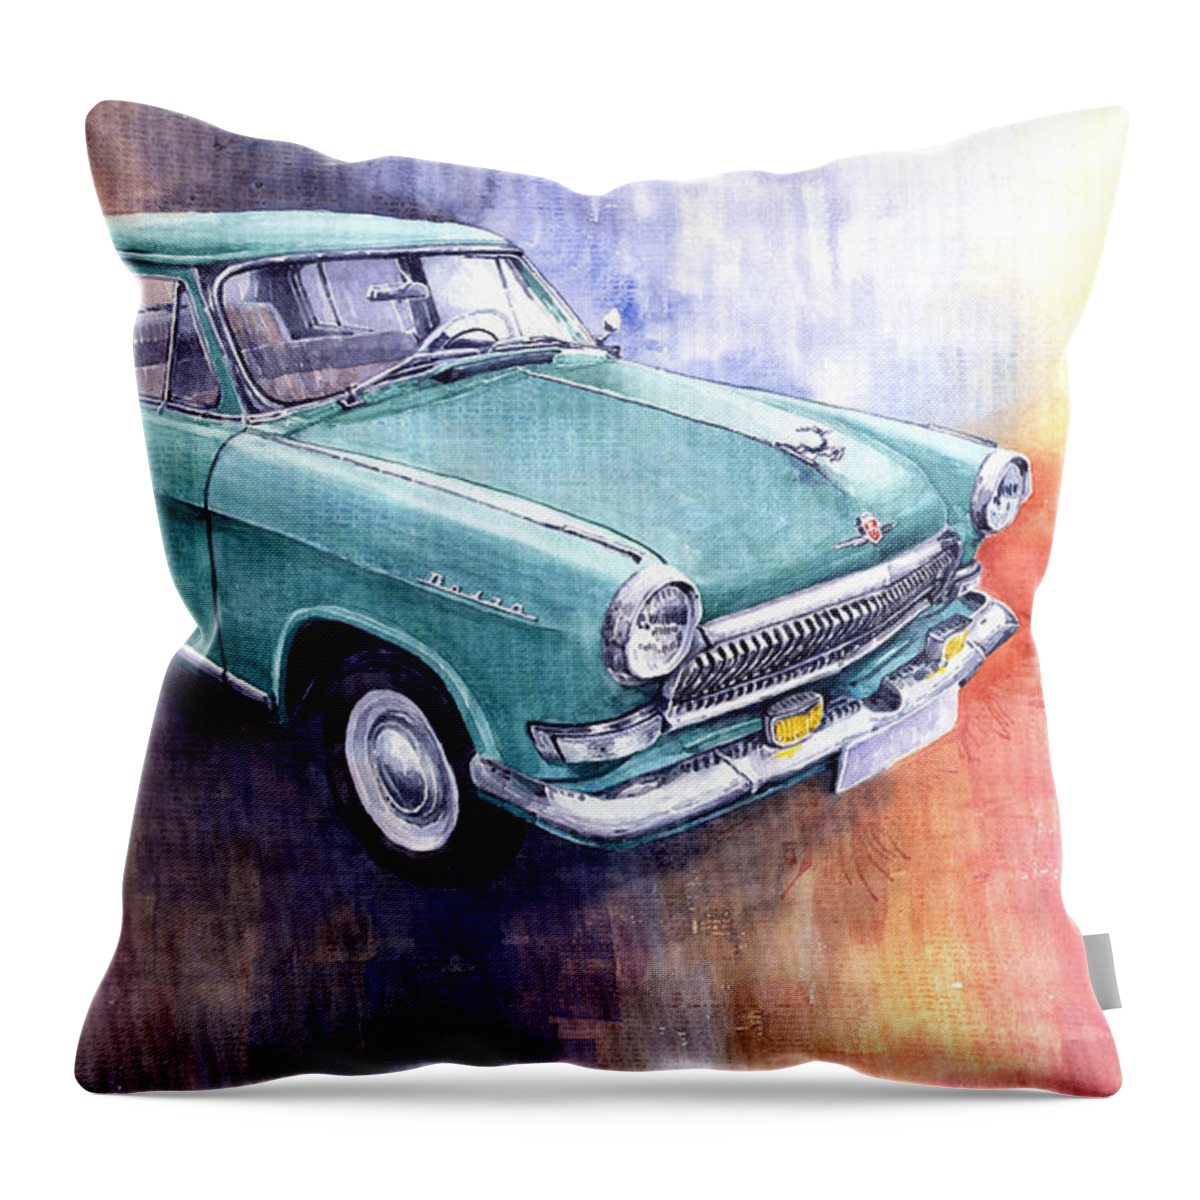 Automotiv Throw Pillow featuring the painting GAZ 21 Volga by Yuriy Shevchuk